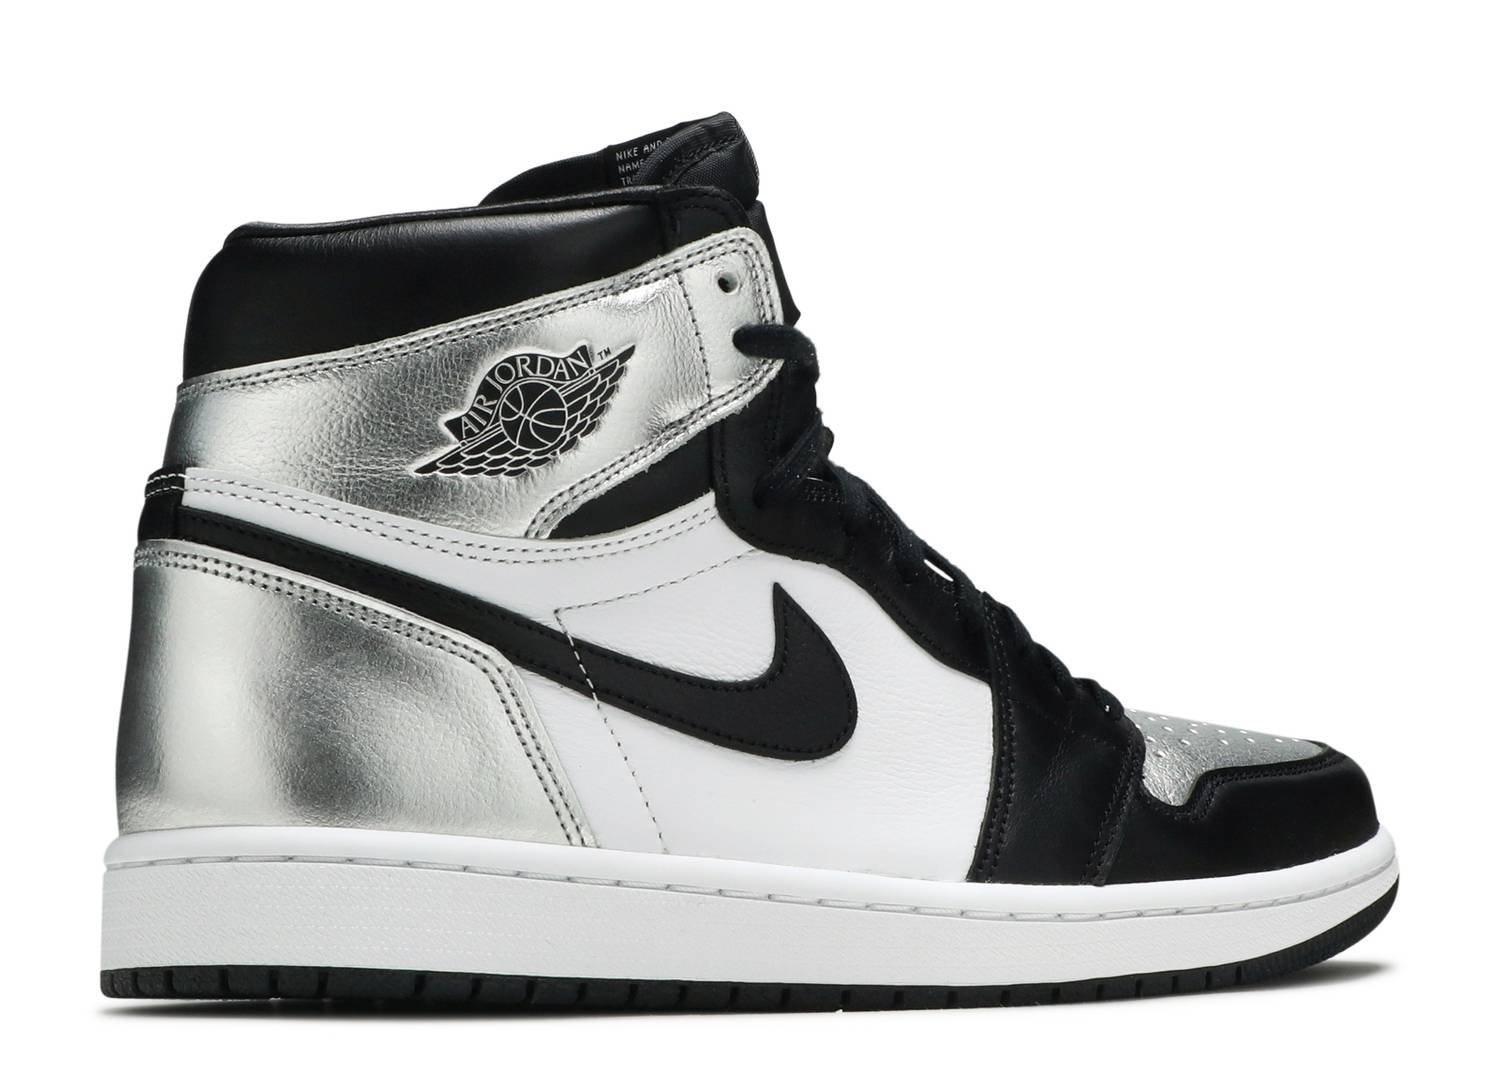 Image of Nike Retro Jordan 1 Hi Wmns "Silver Toe" Sz 10W/8.5M